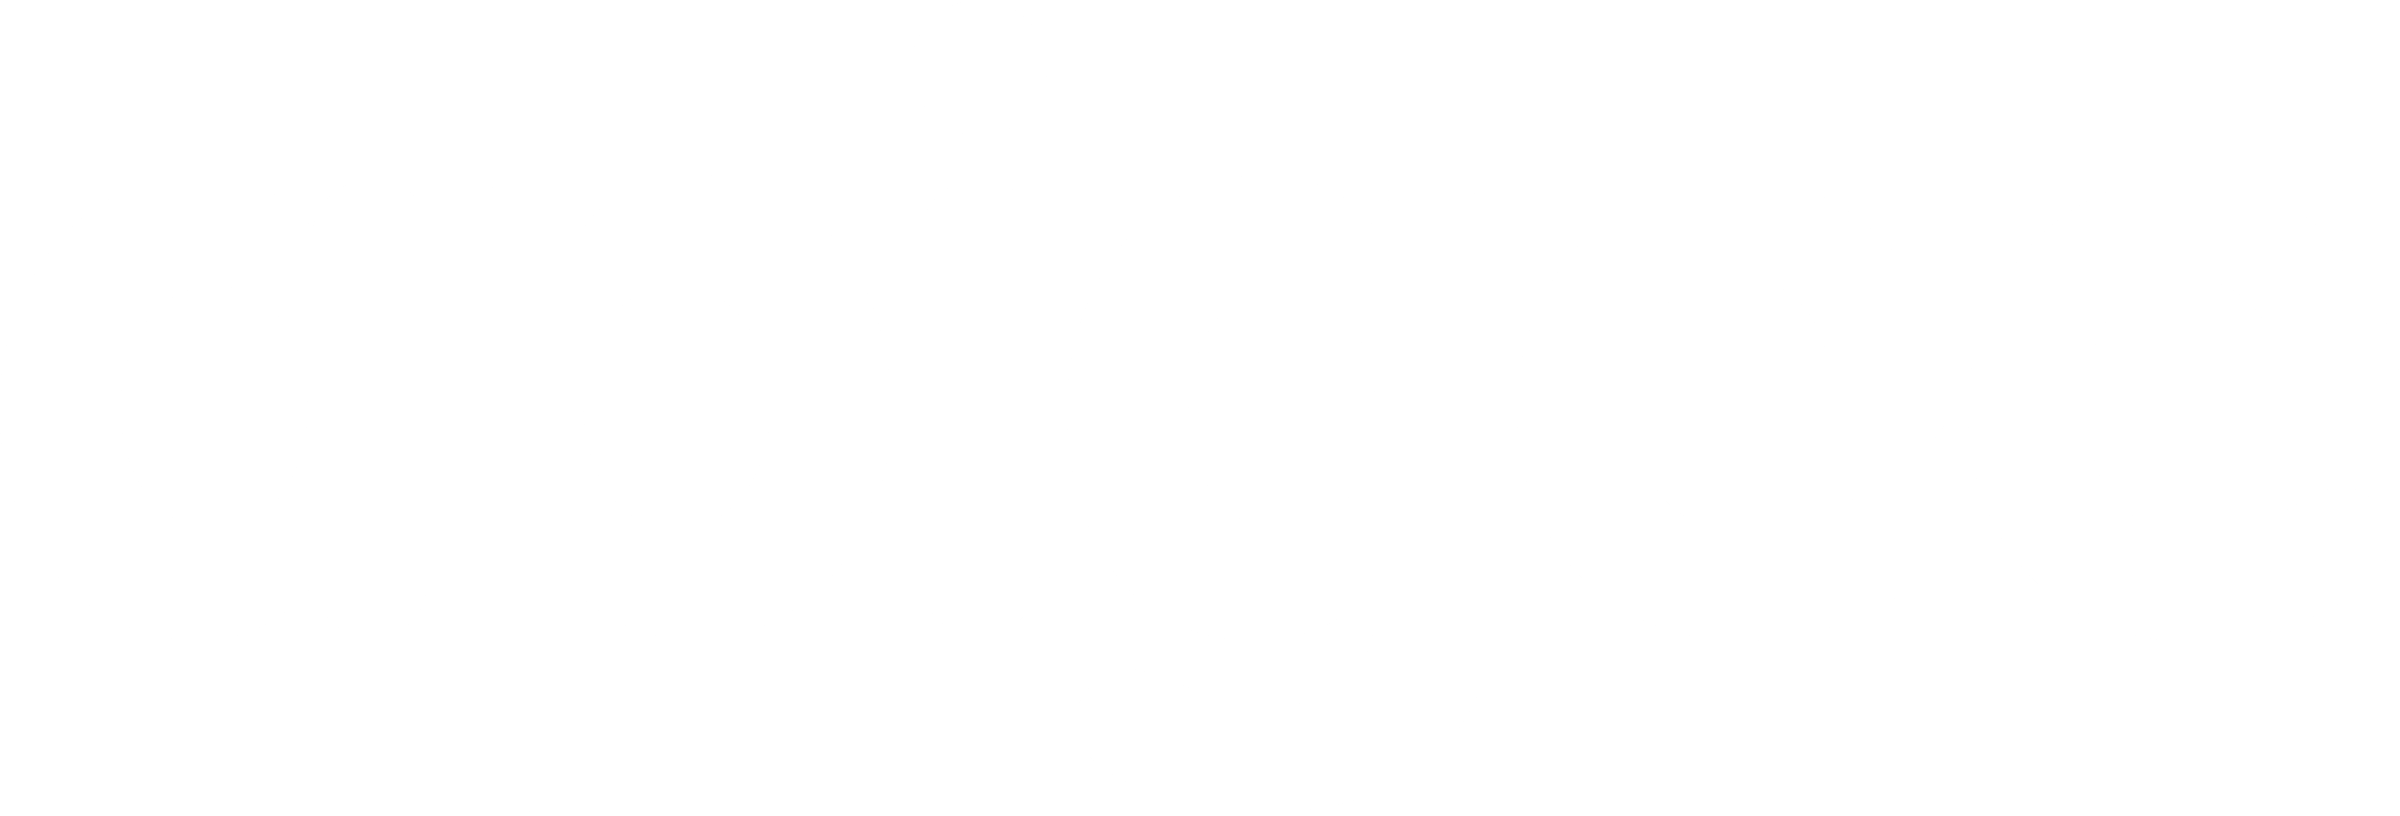 Apigee Logo - Apigee Logo PNG Transparent & SVG Vector - Freebie Supply